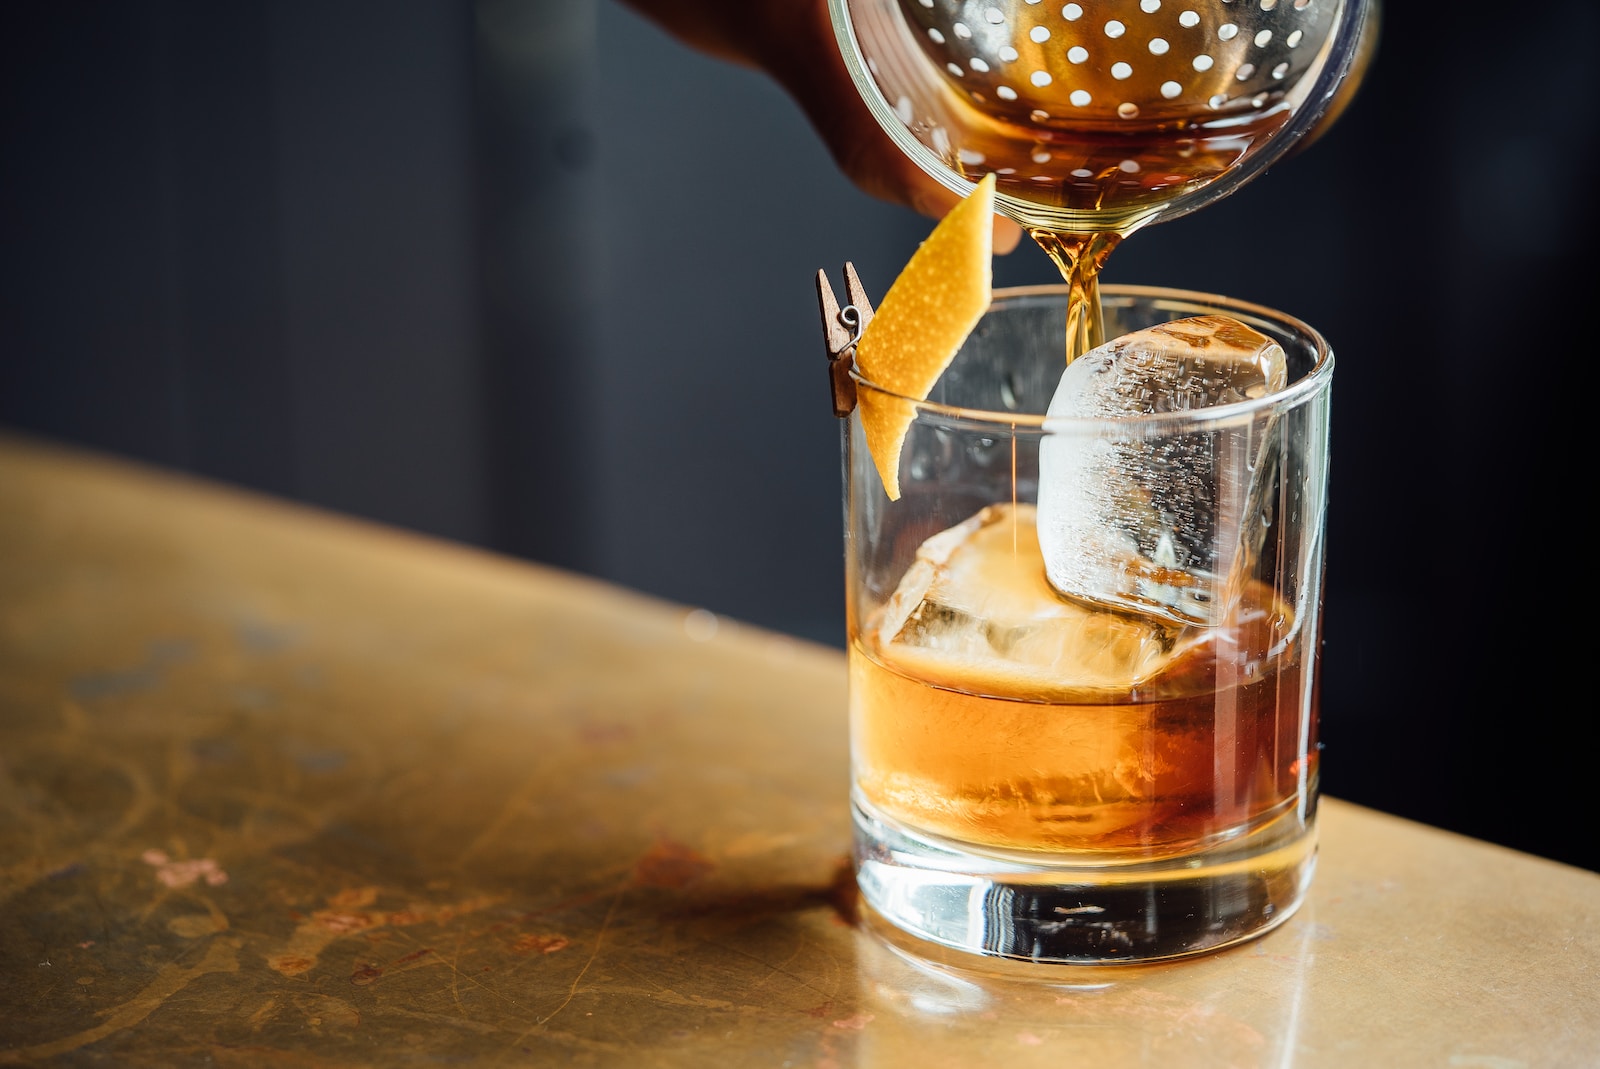 Manhattan liquor pouring on clear shot glass